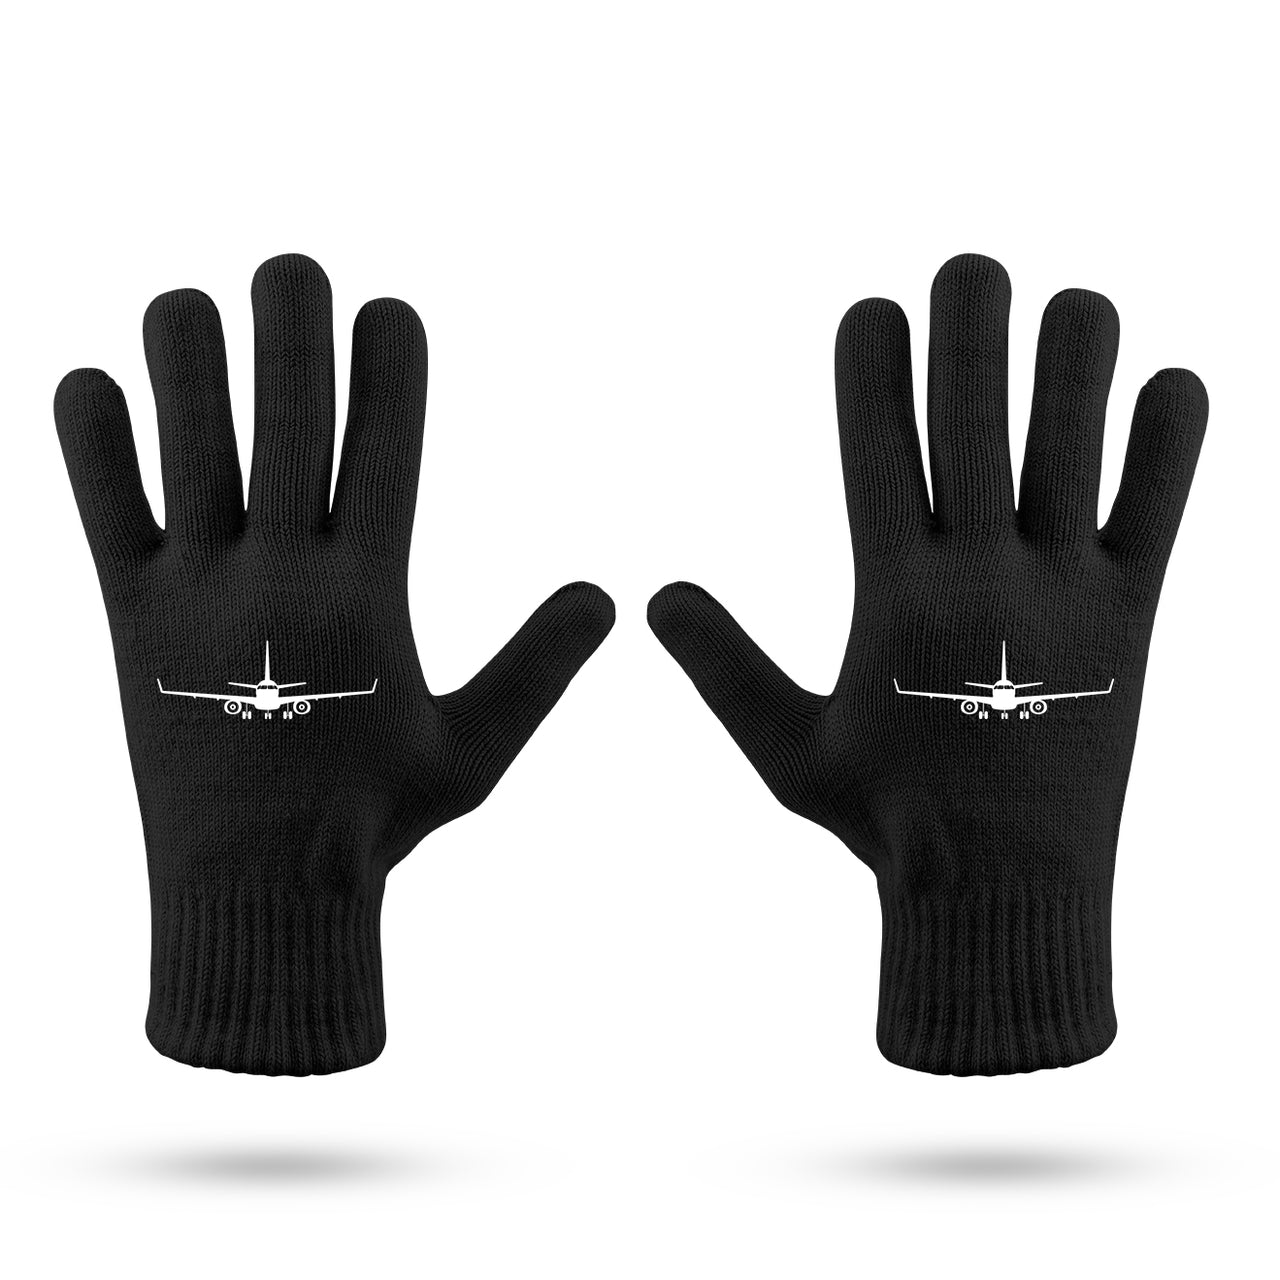 Embraer E-190 Silhouette Plane Designed Gloves